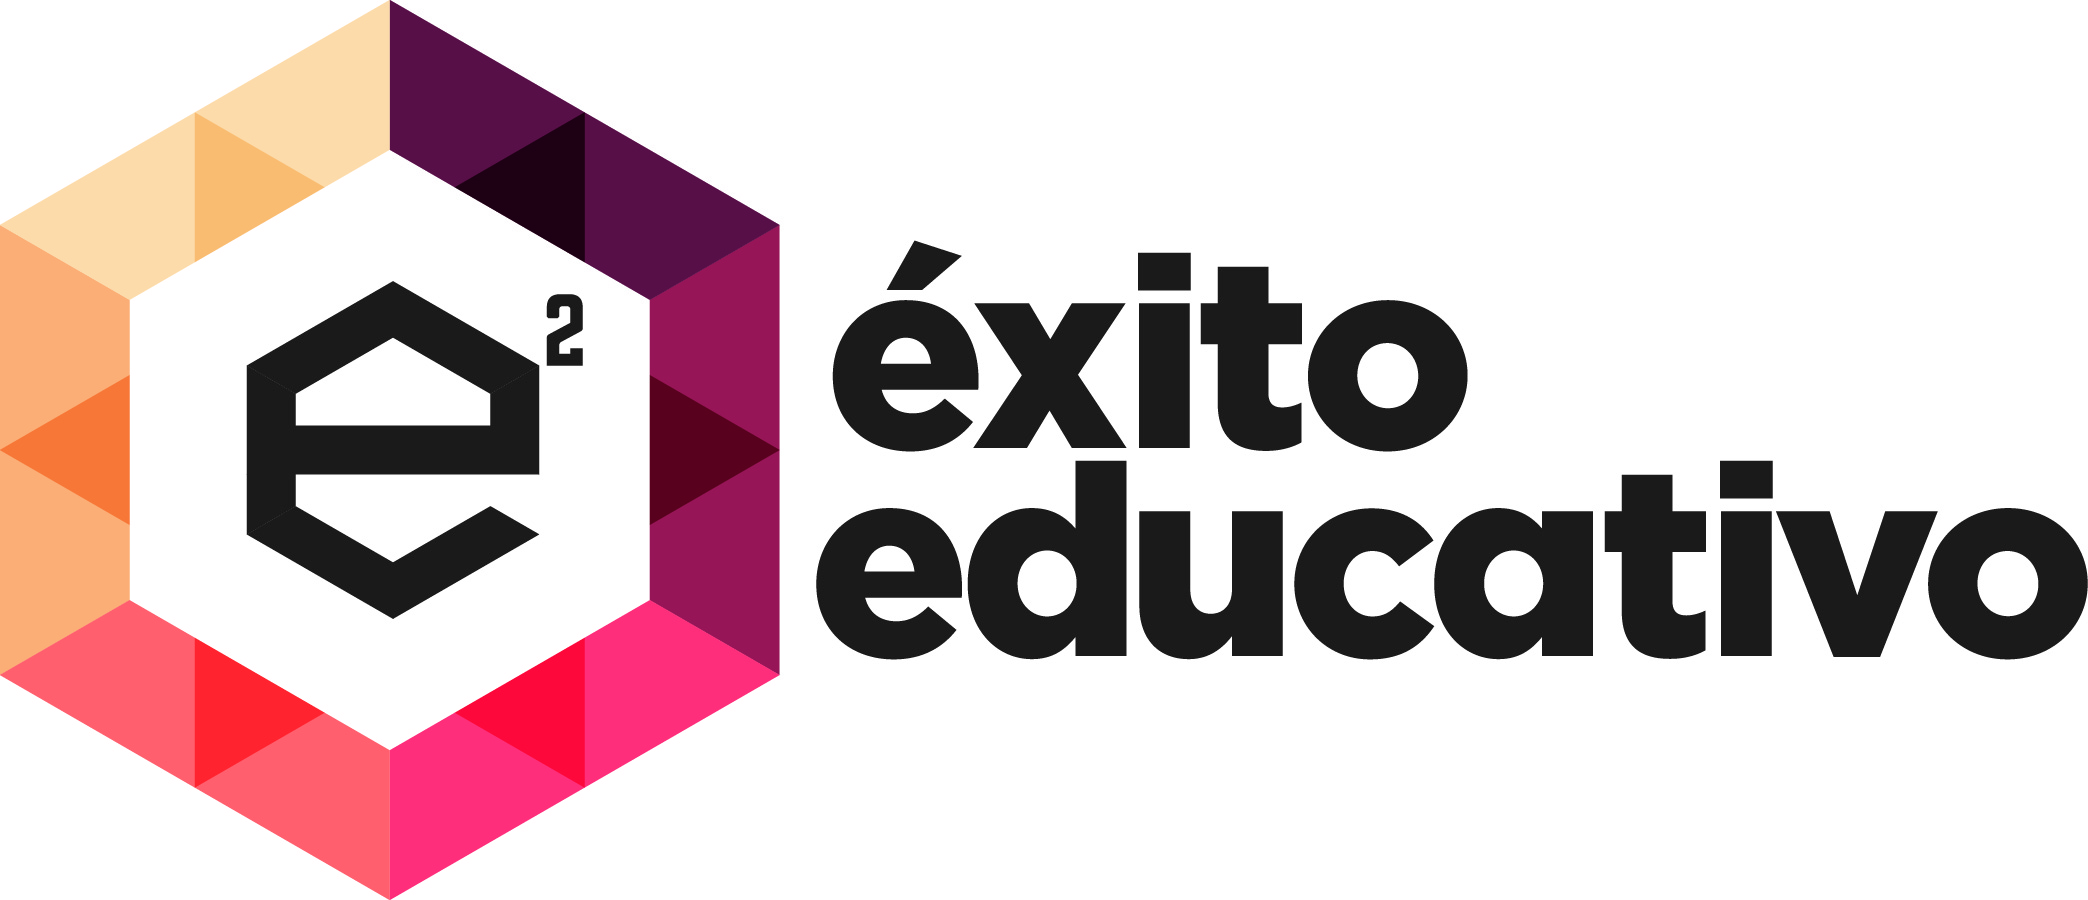 Exito Educativo logo